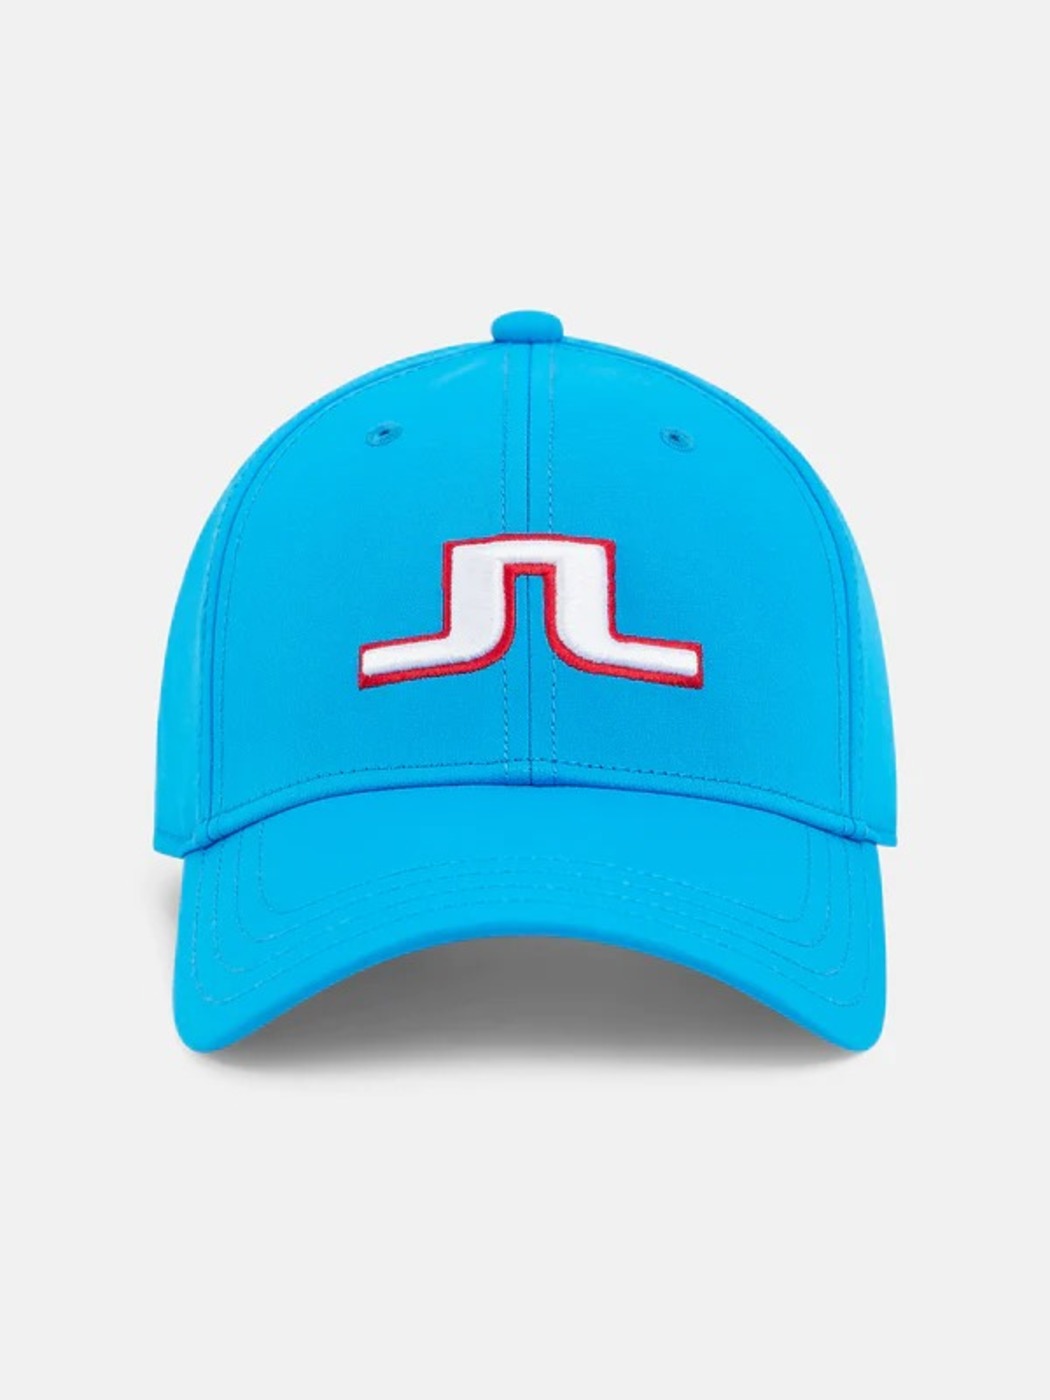 Jaylindberg SS23 Unisex Golf Hat Angus Cap Hat (Brilliant Blue)